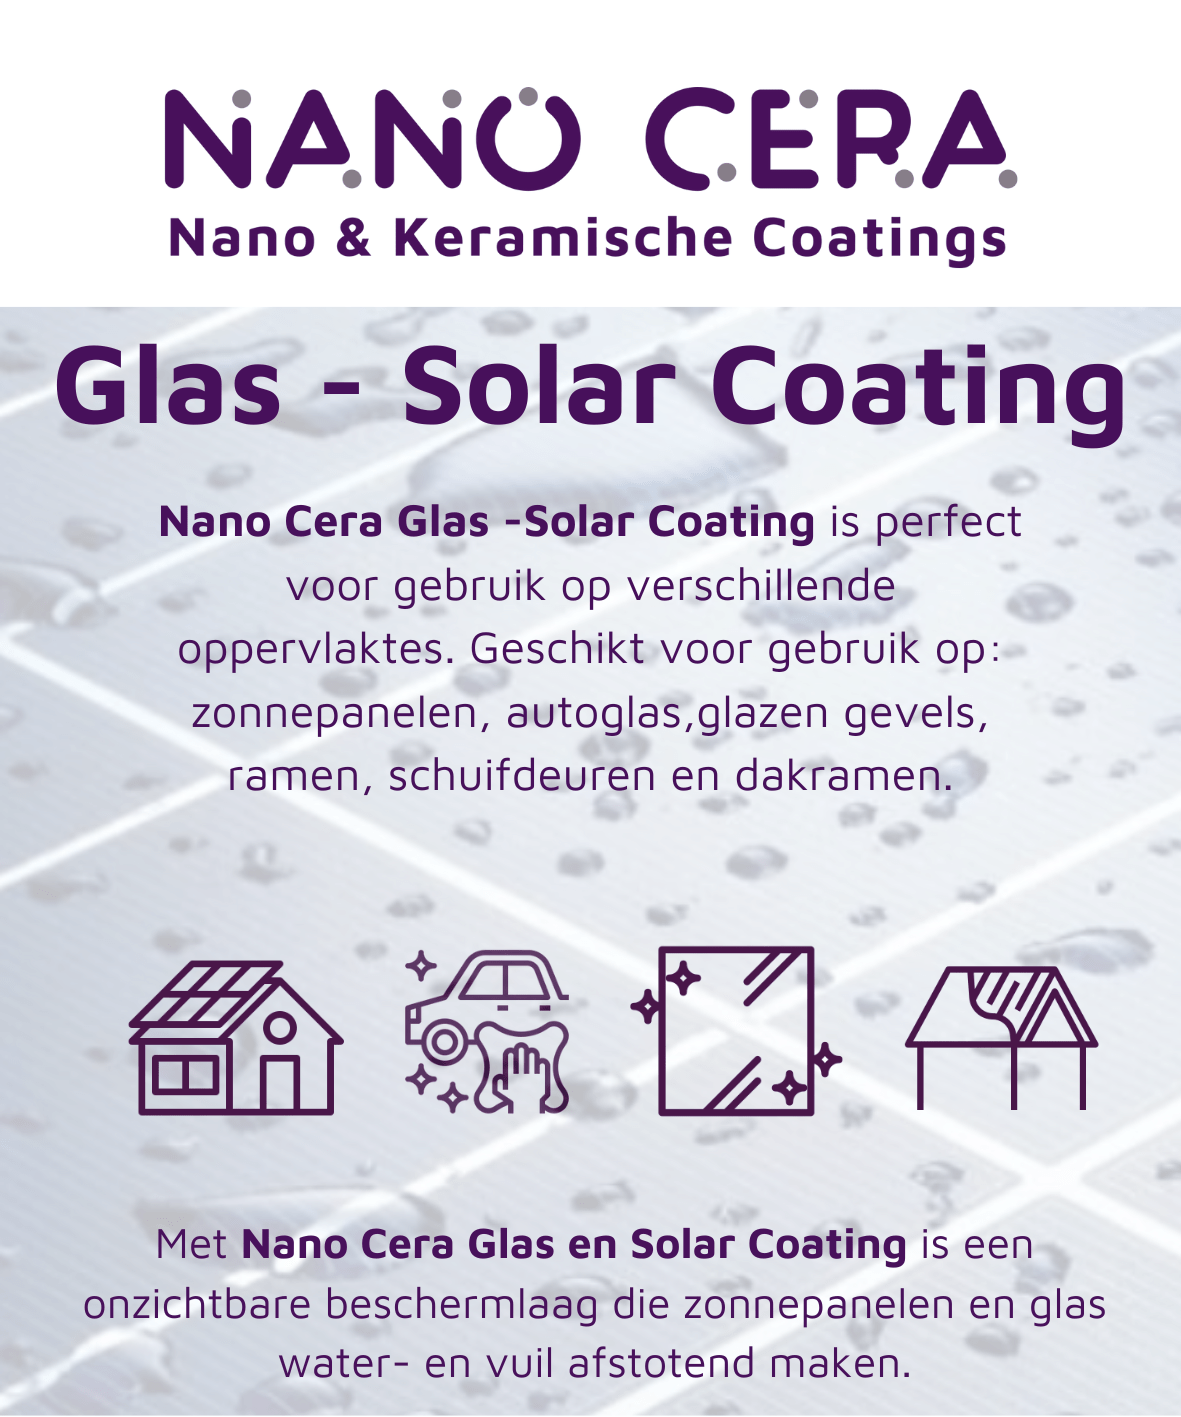 Nano Cero glas - solar coating voor zonnepanelen